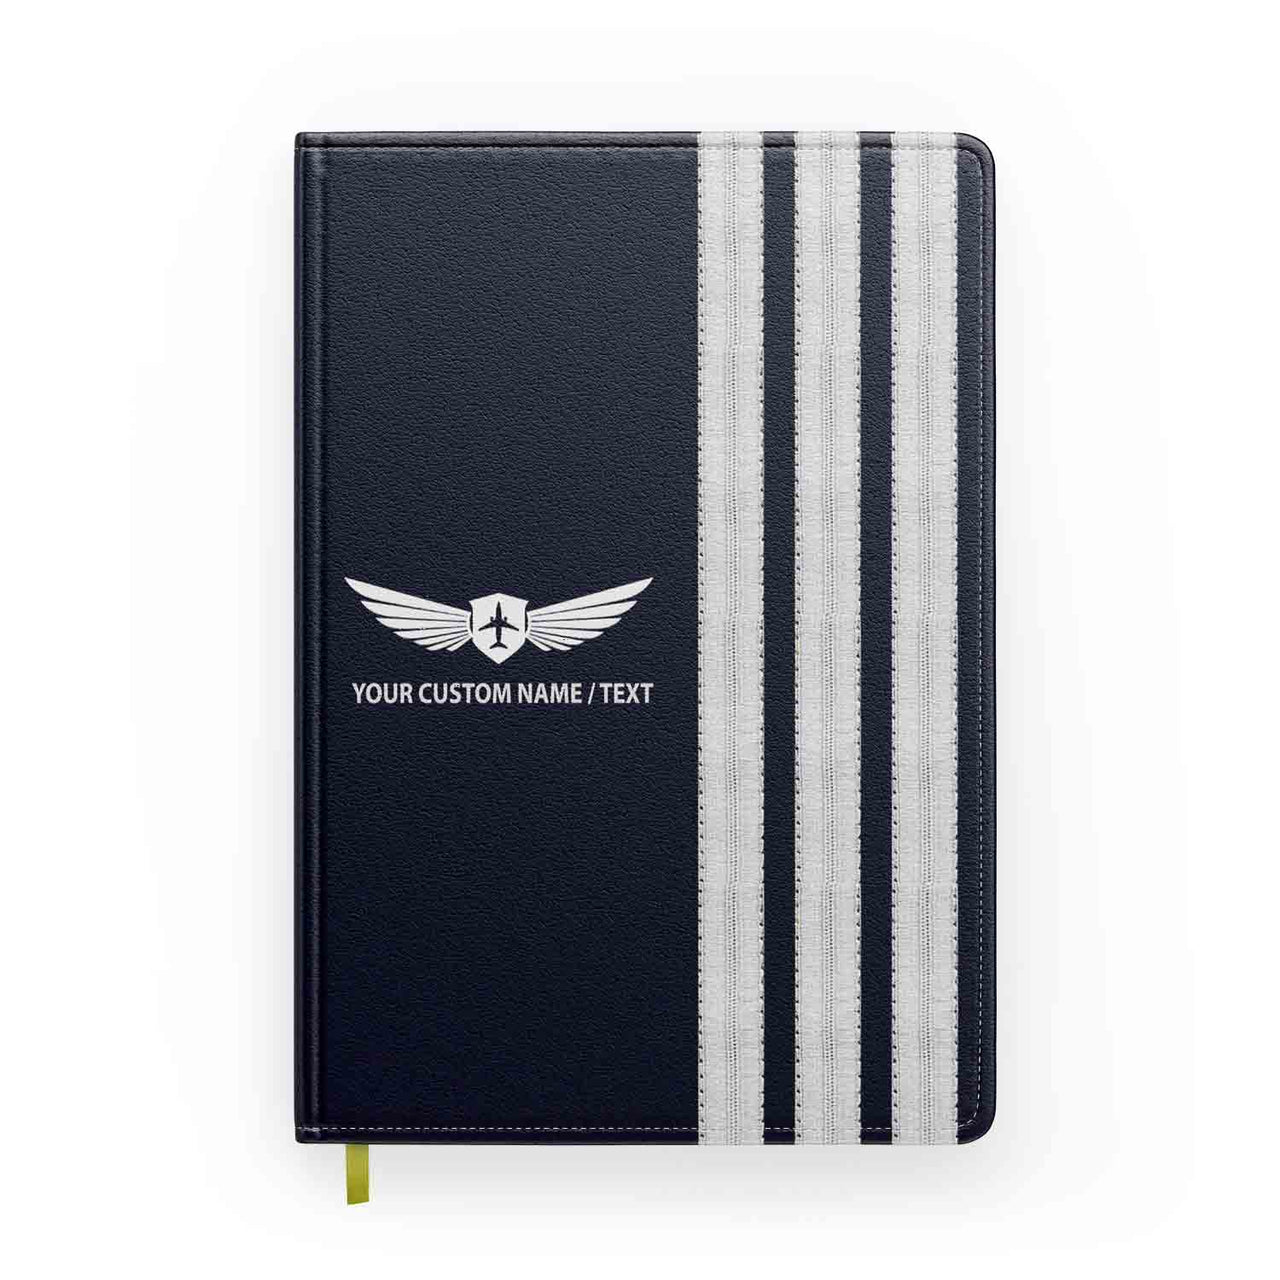 Customizable Name & Special "SILVER" Pilot Epaulettes Designed Notebooks